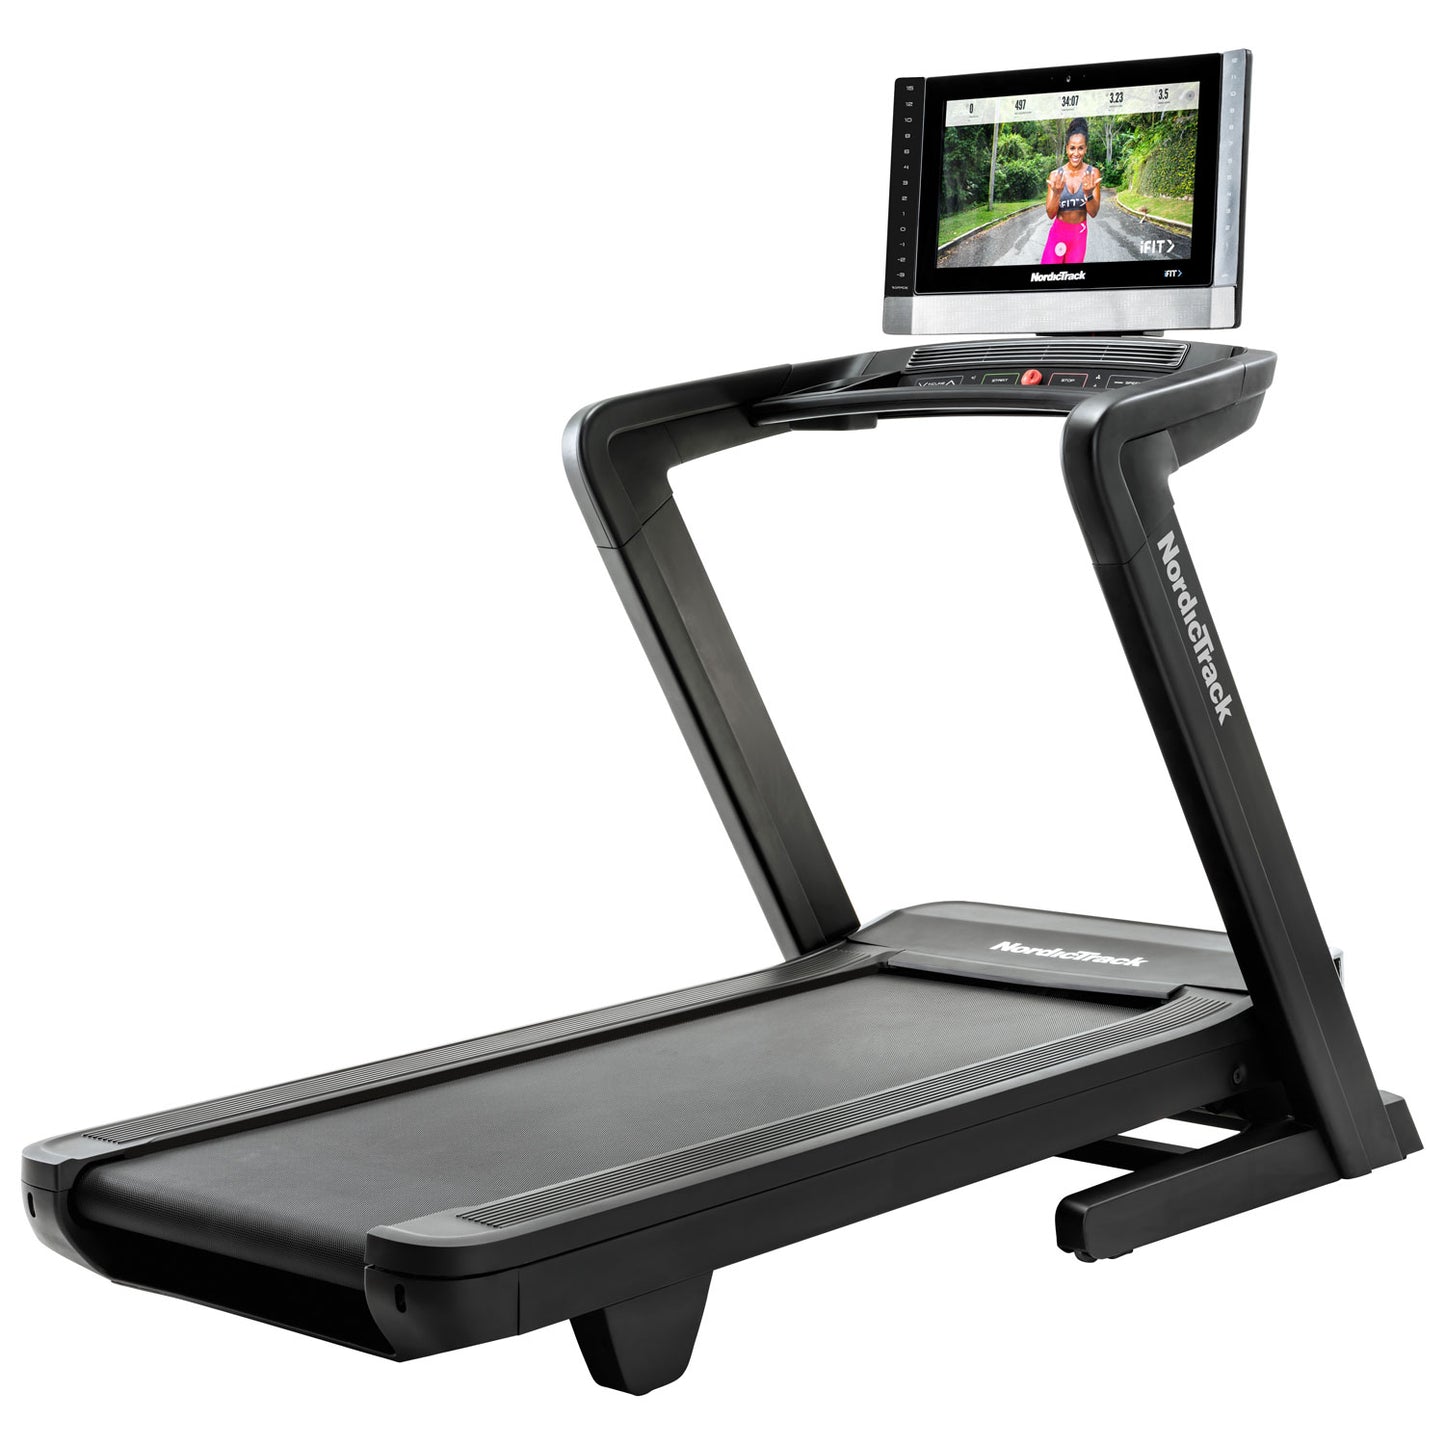 NordicTrack Commercial Treadmill 2450 - NTL19124